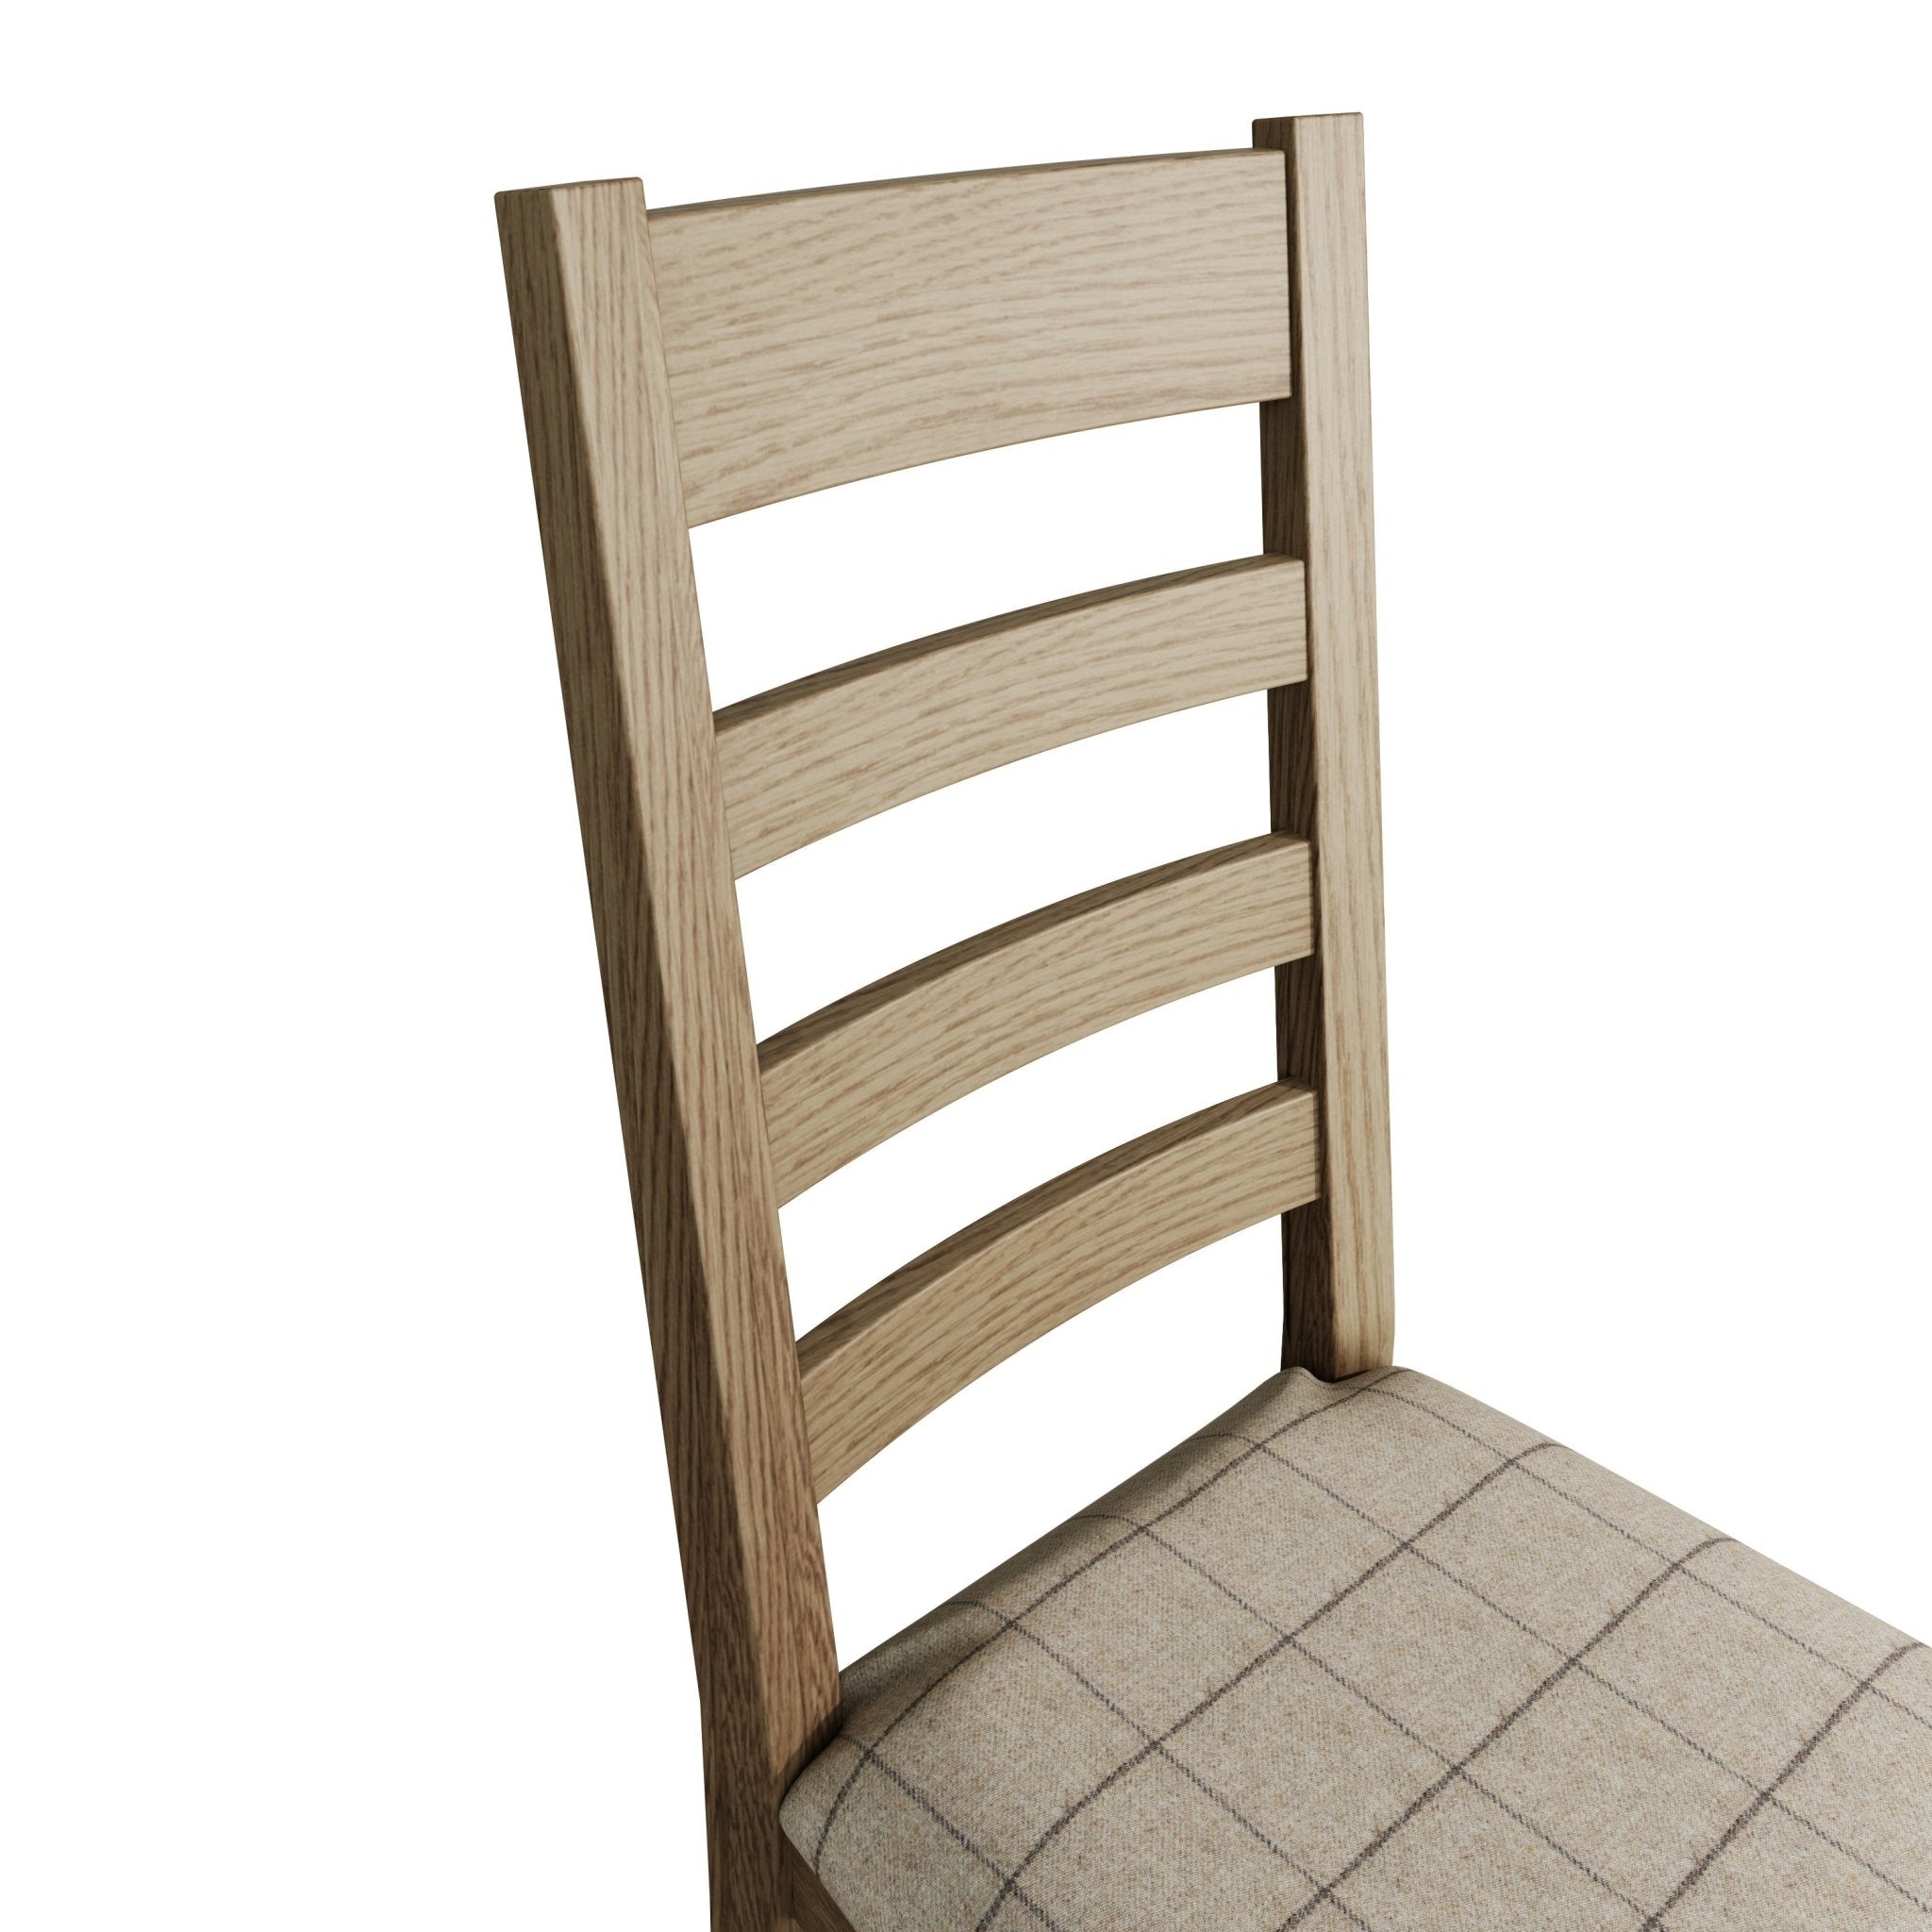 Rusper Oak Slatted Fabric Dining Chair - Natural Check - Duck Barn Interiors